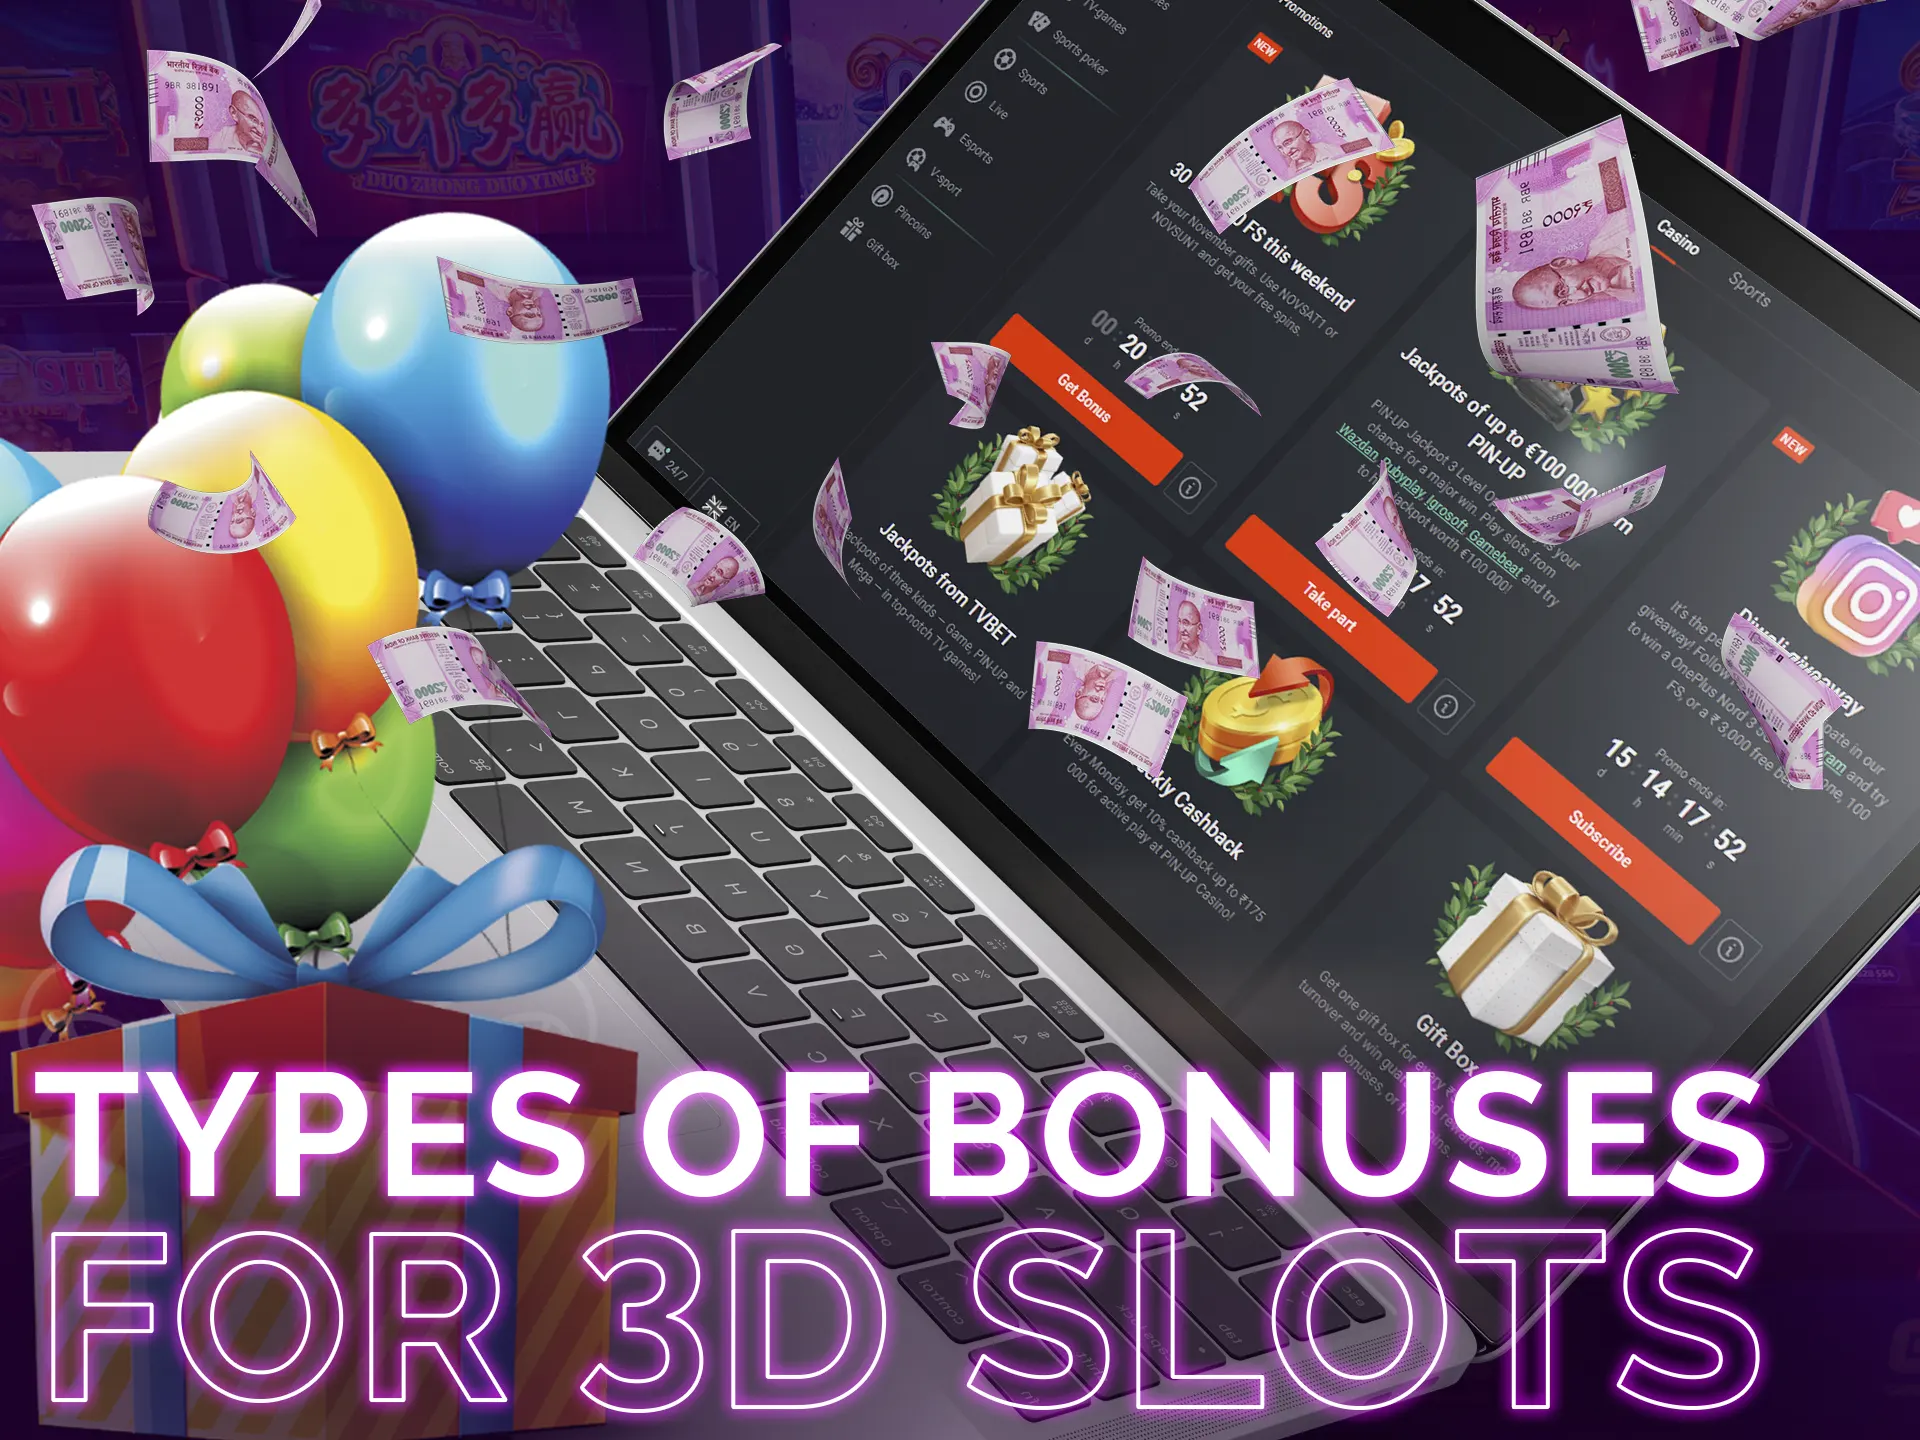 Take advantage of bonuses and make playing 3D slots more successful.